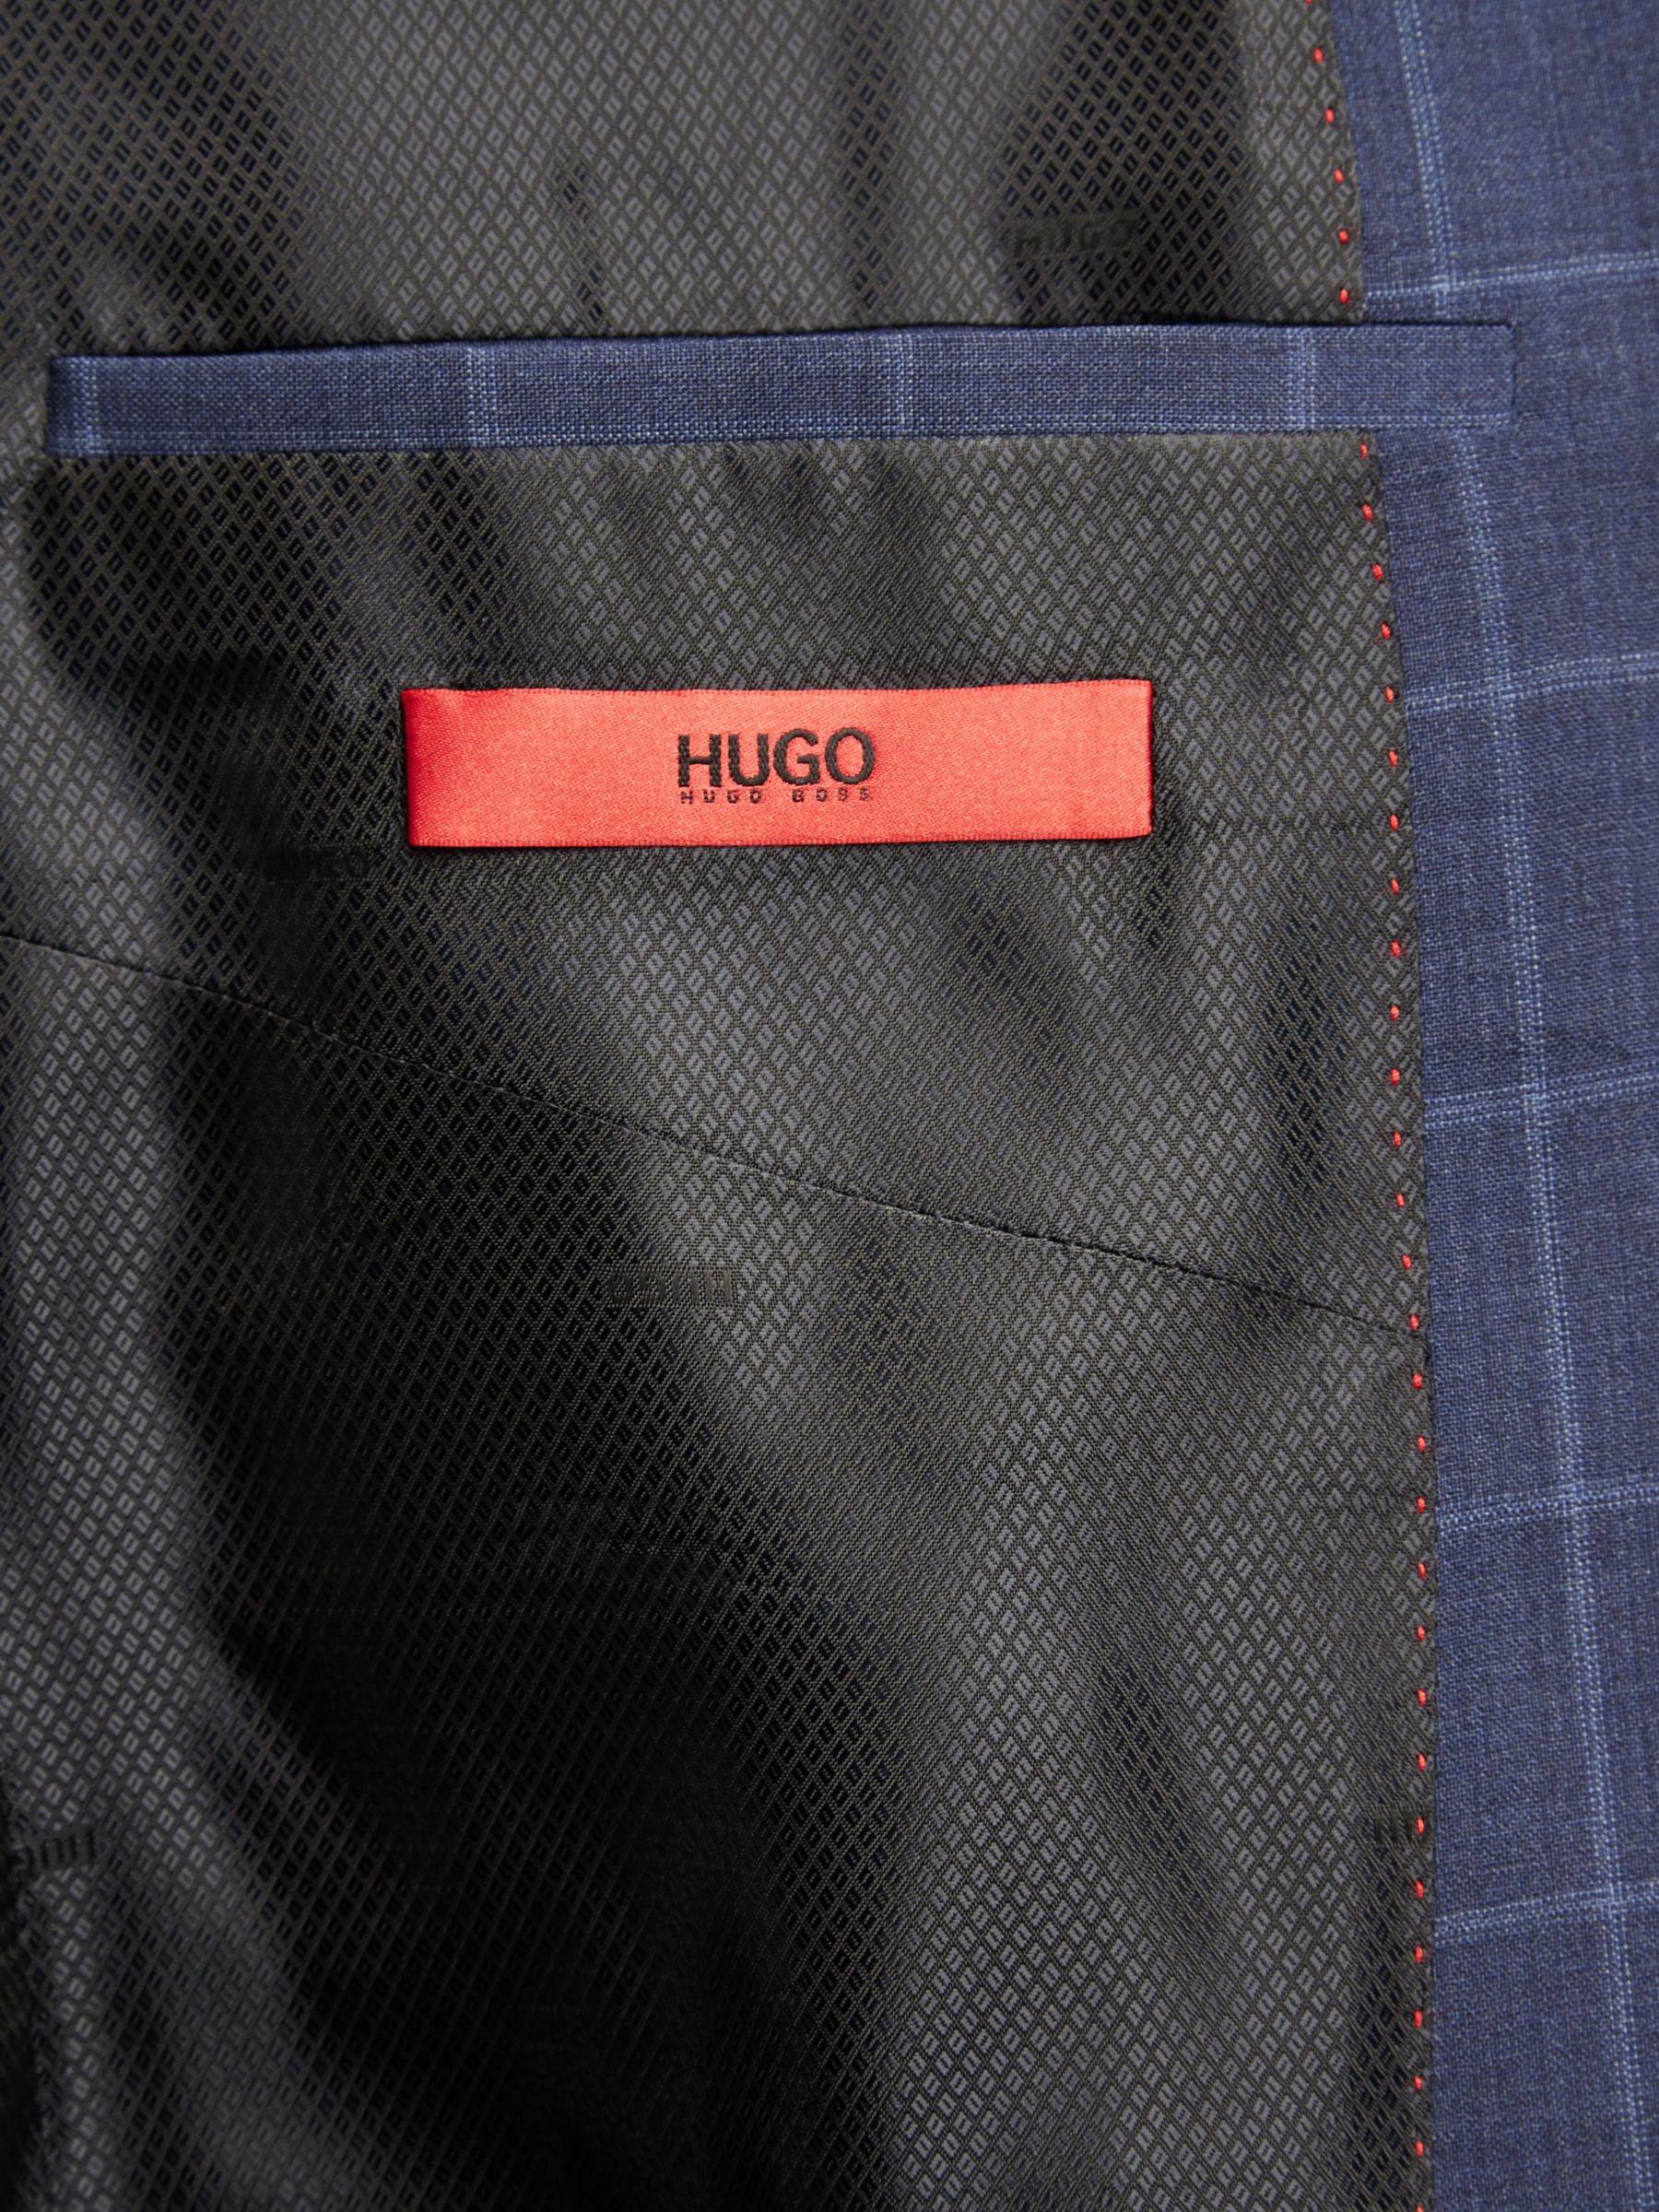 hugo boss windowpane suit